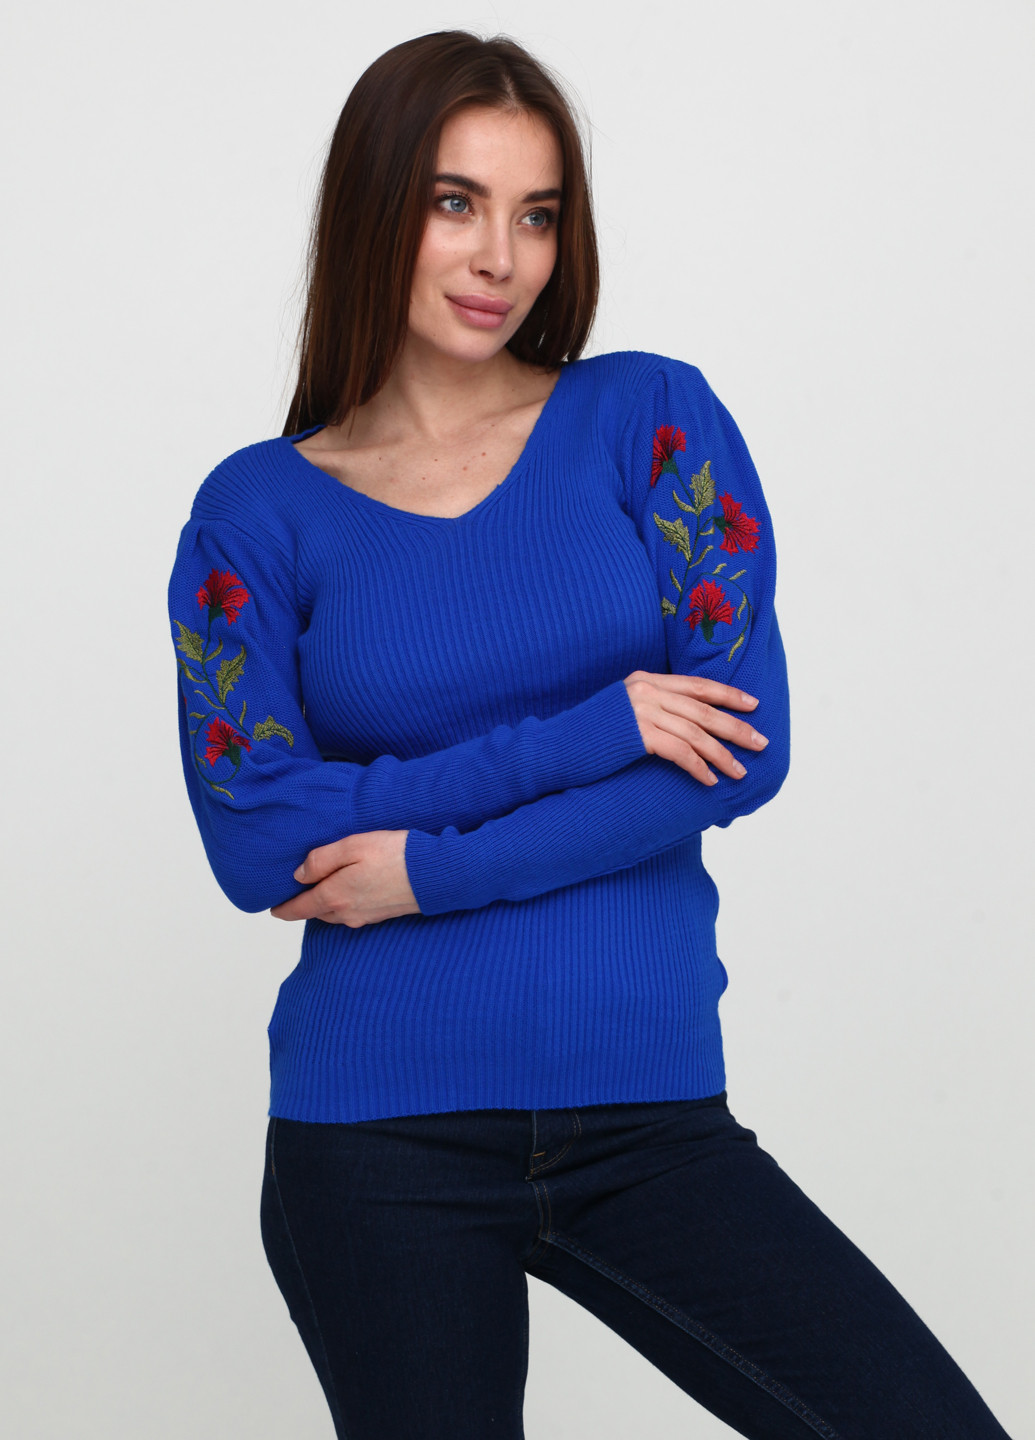 Индиго демисезонный пуловер пуловер Metin Triko